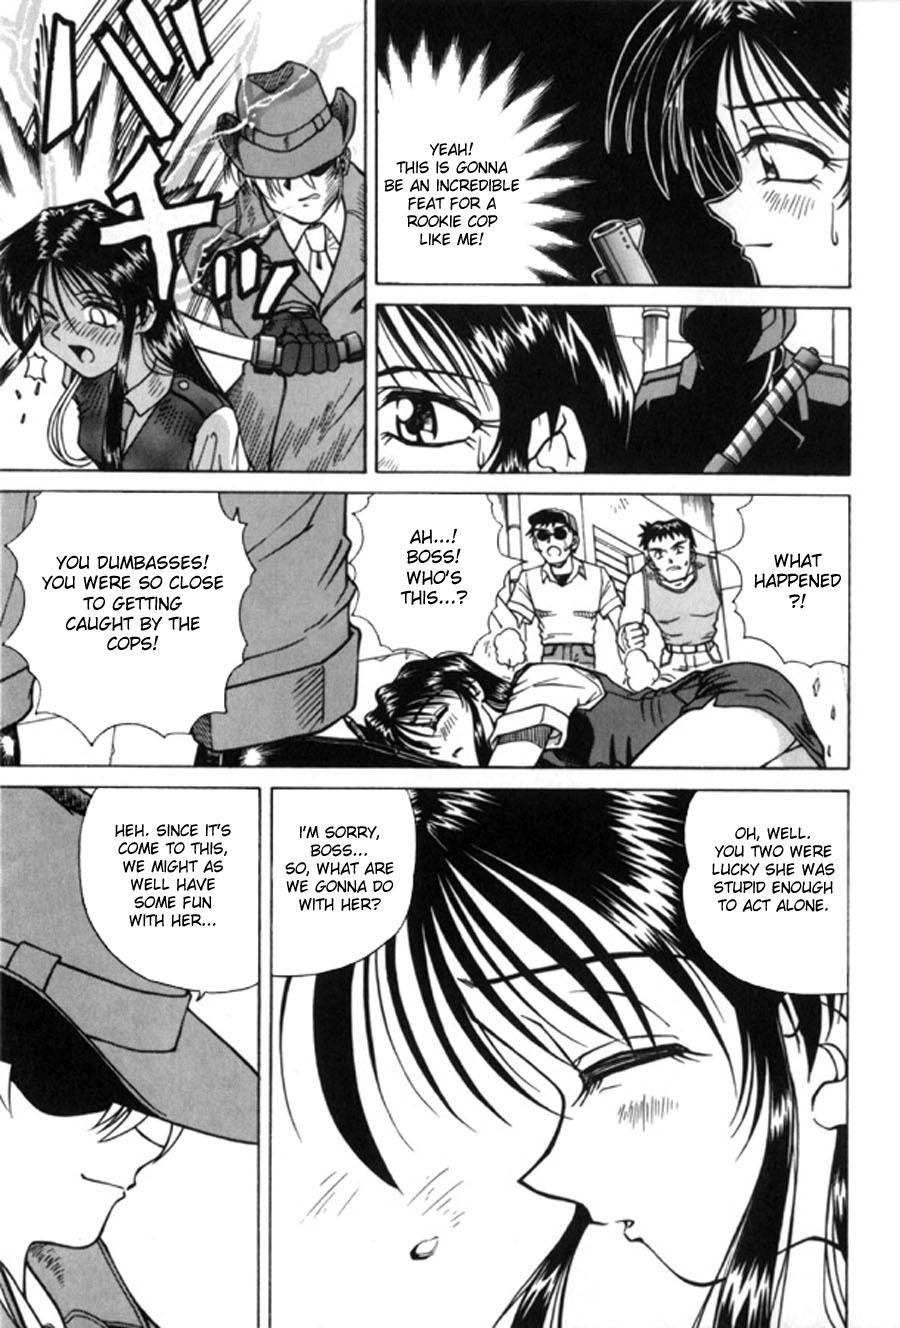 The Suffering of Officer Saki by Spark Utamaro 2